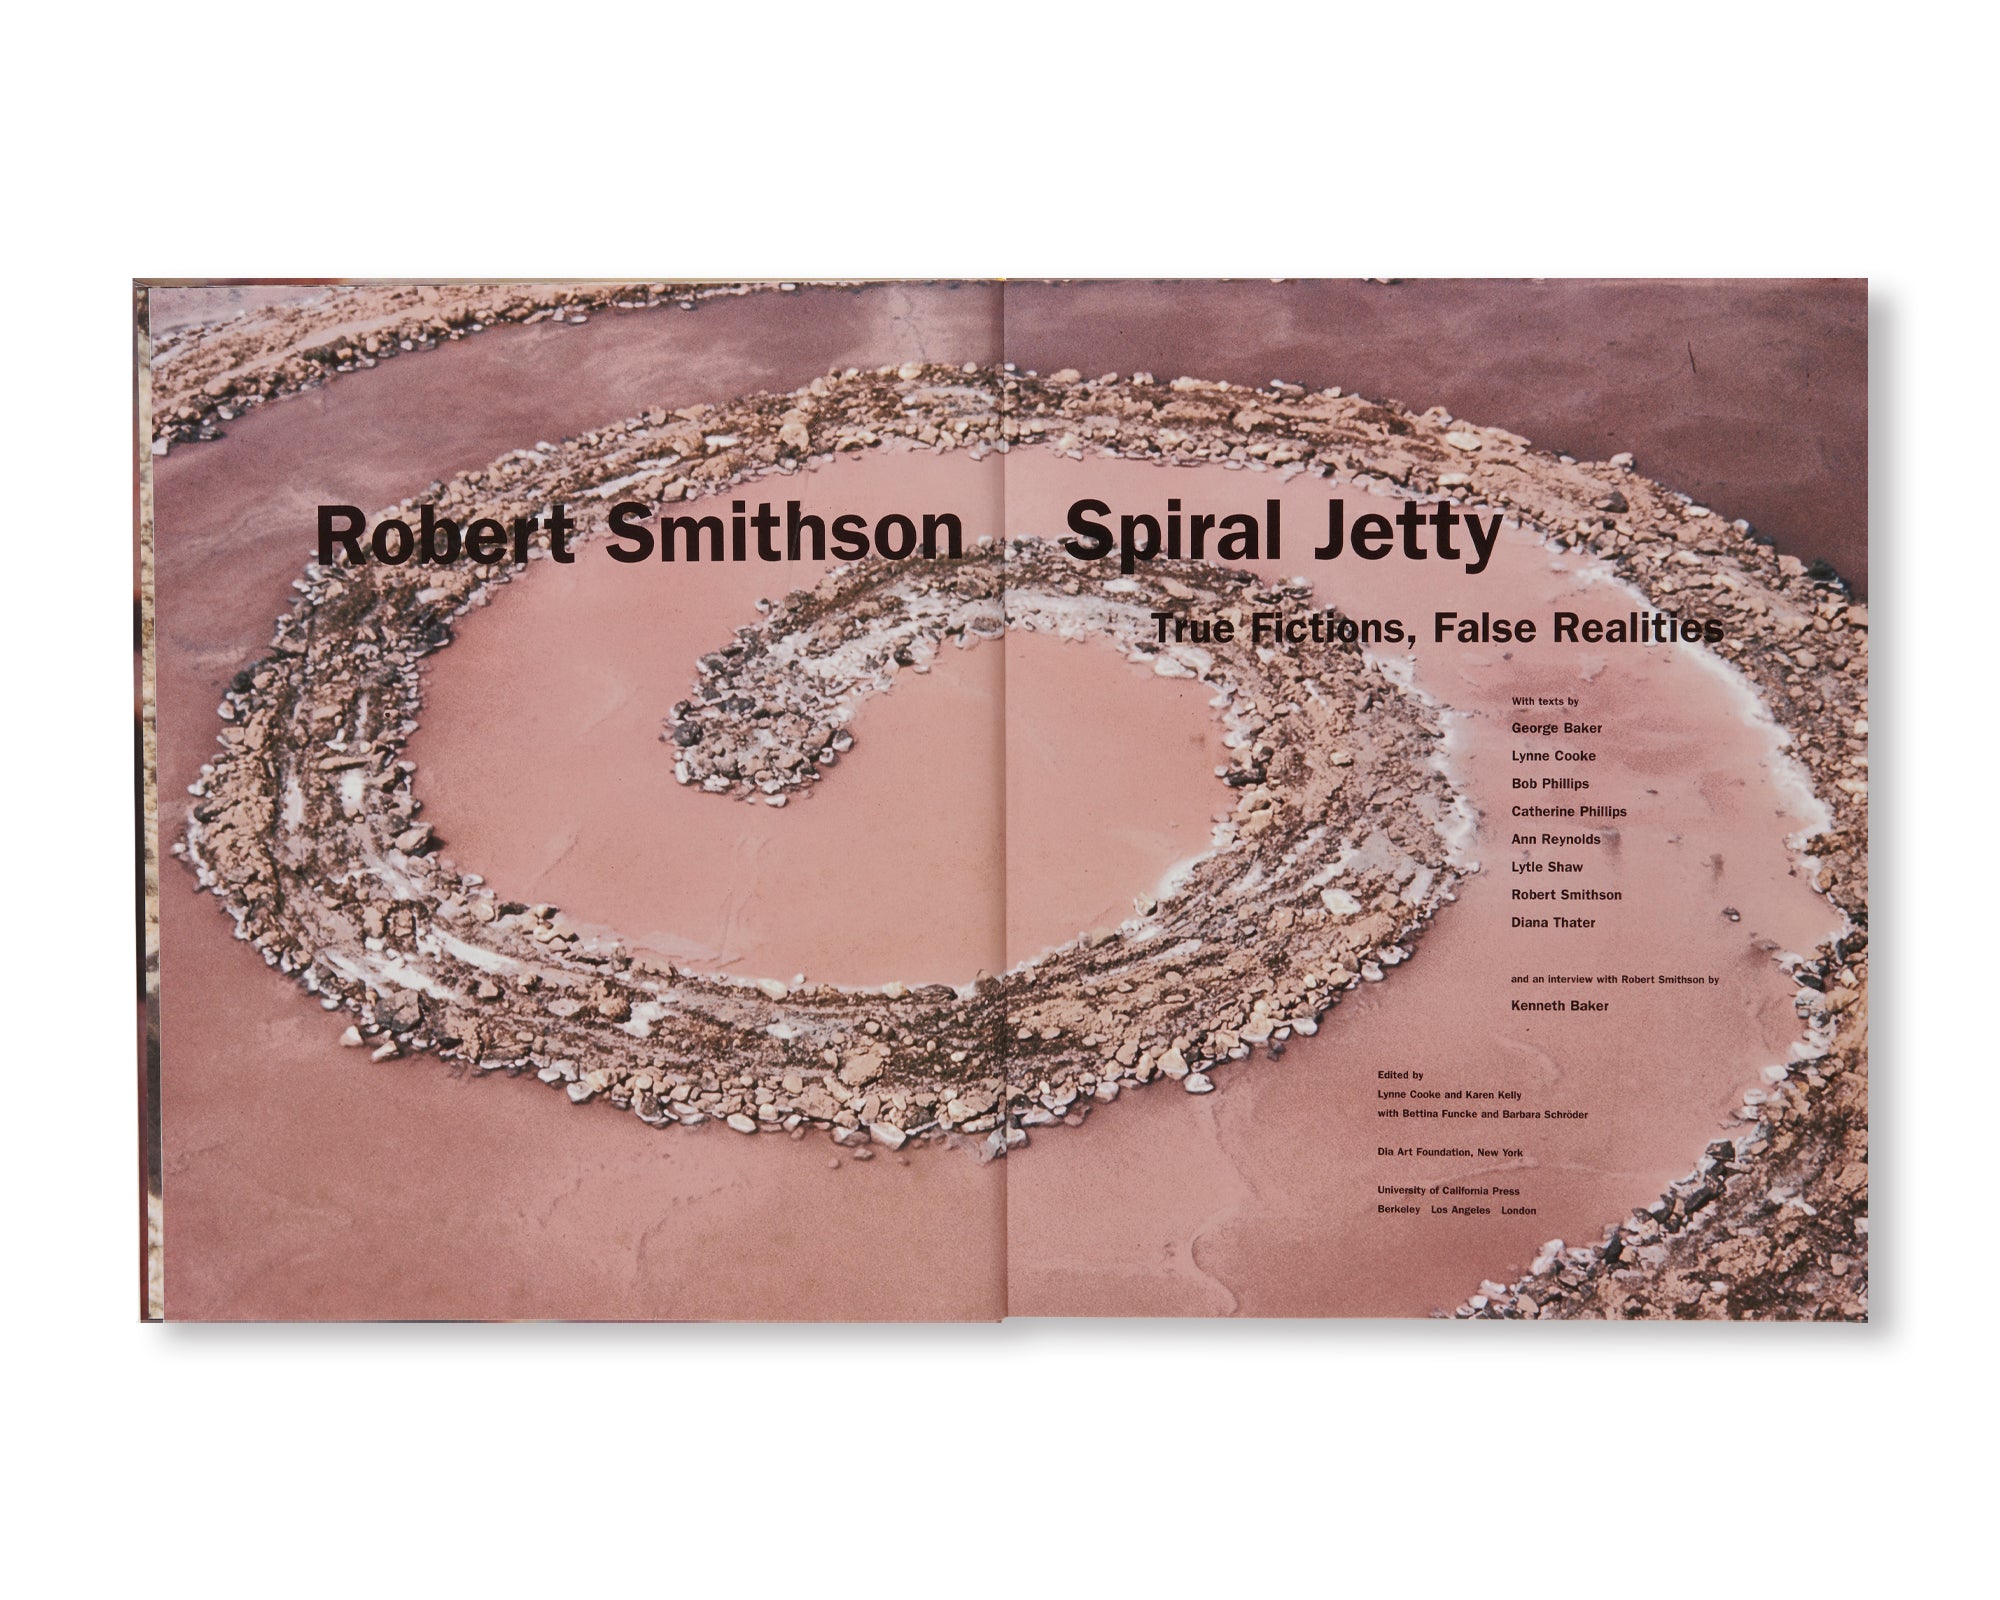 SPIRAL JETTY by Robert Smithson